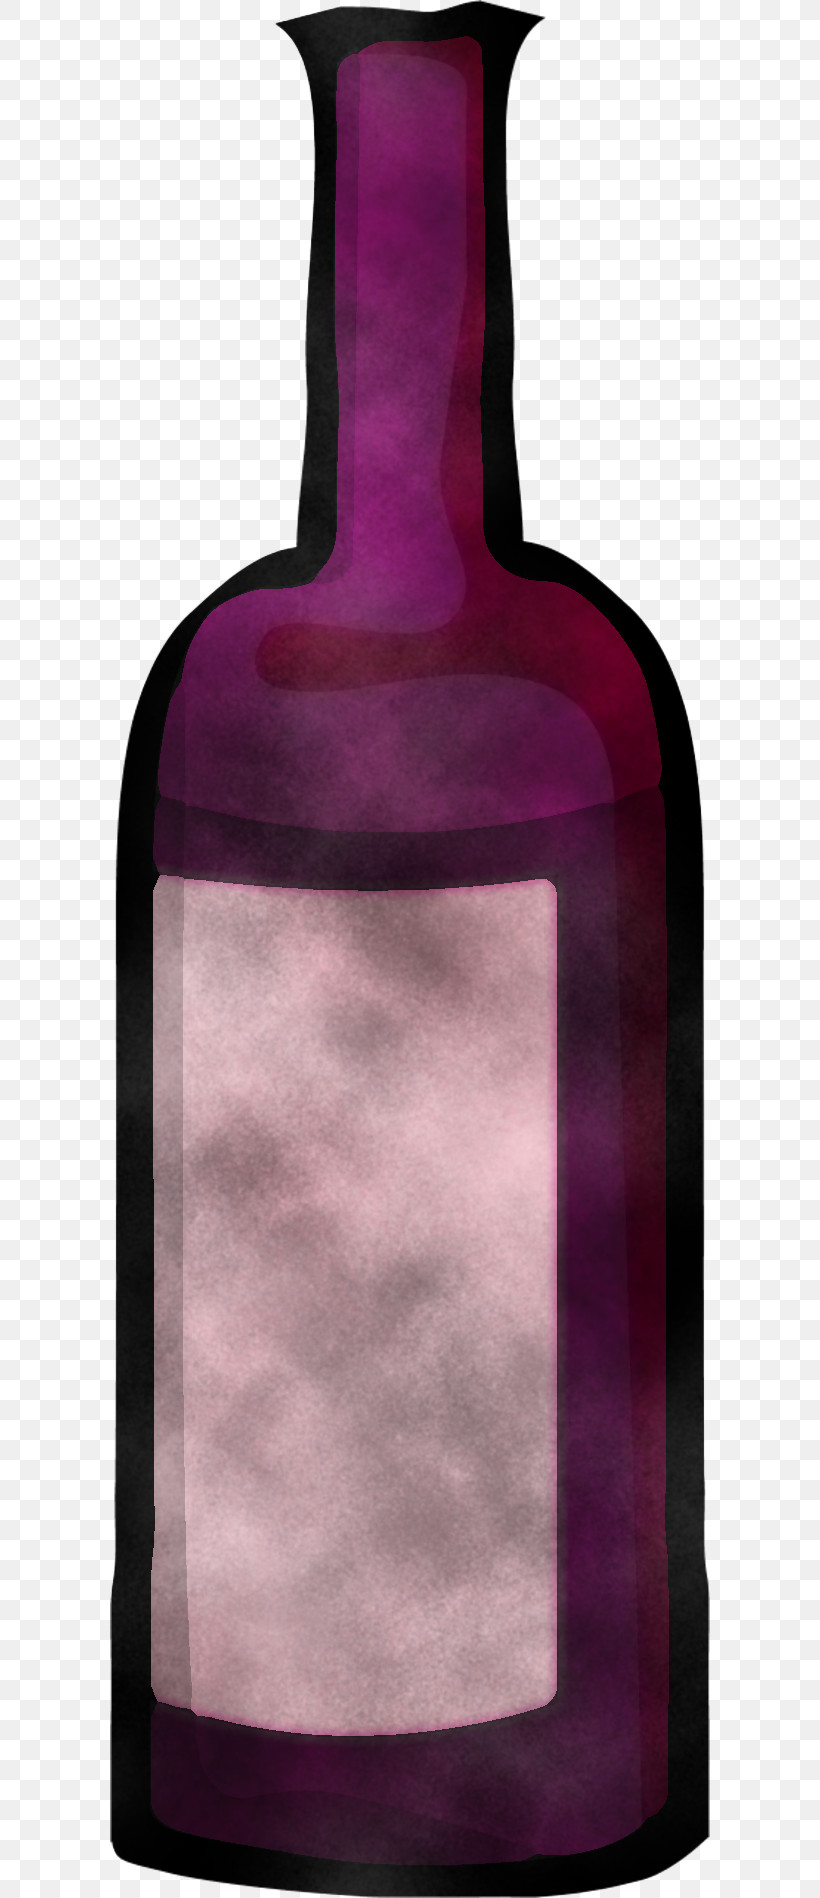 Bottle Purple Violet Pink Glass Bottle, PNG, 600x1898px, Bottle, Glass Bottle, Magenta, Pink, Purple Download Free